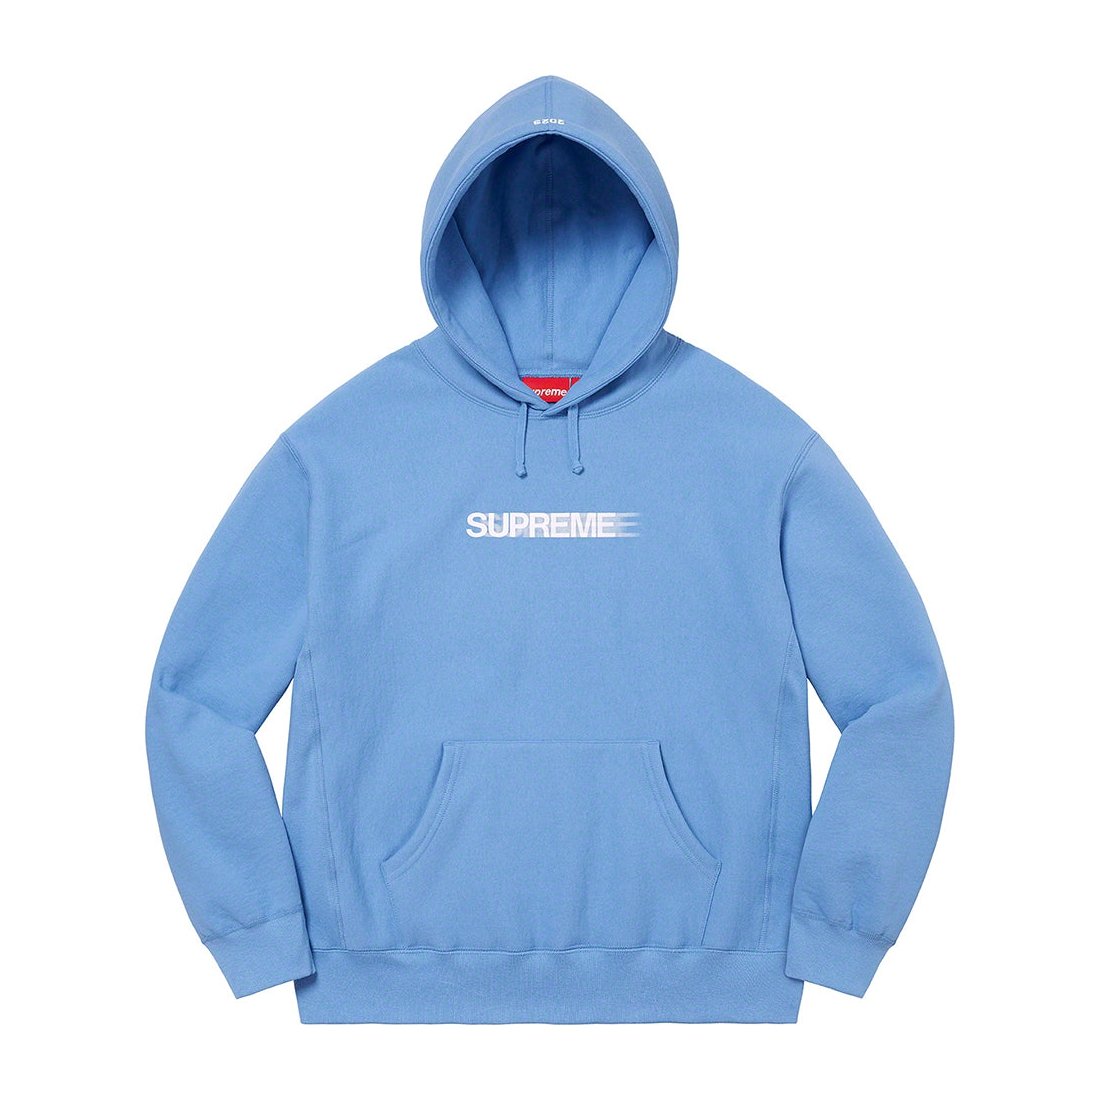 L Supreme Motion Logo Hooded Sweatshirt